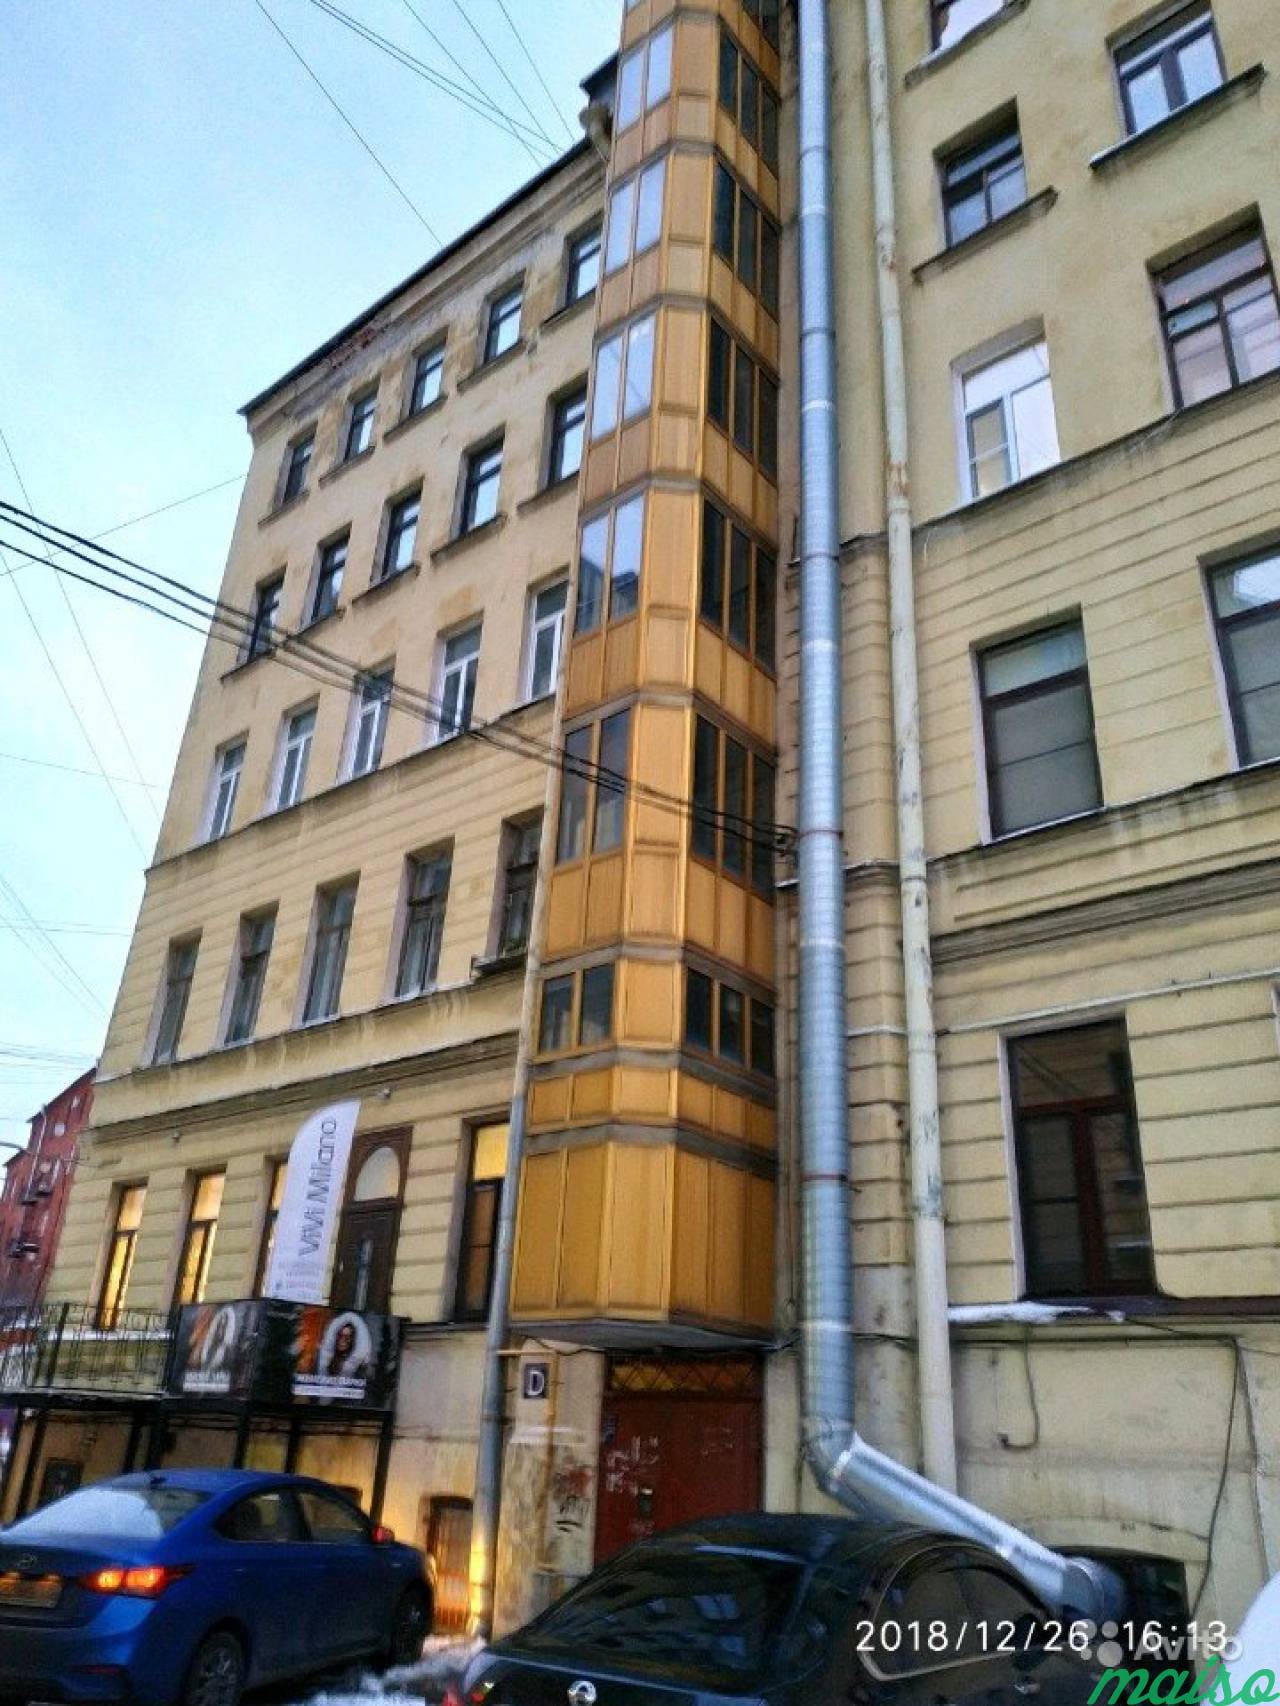 Комната 23 м² в 4-к, 3/5 эт. в Санкт-Петербурге. Фото 1